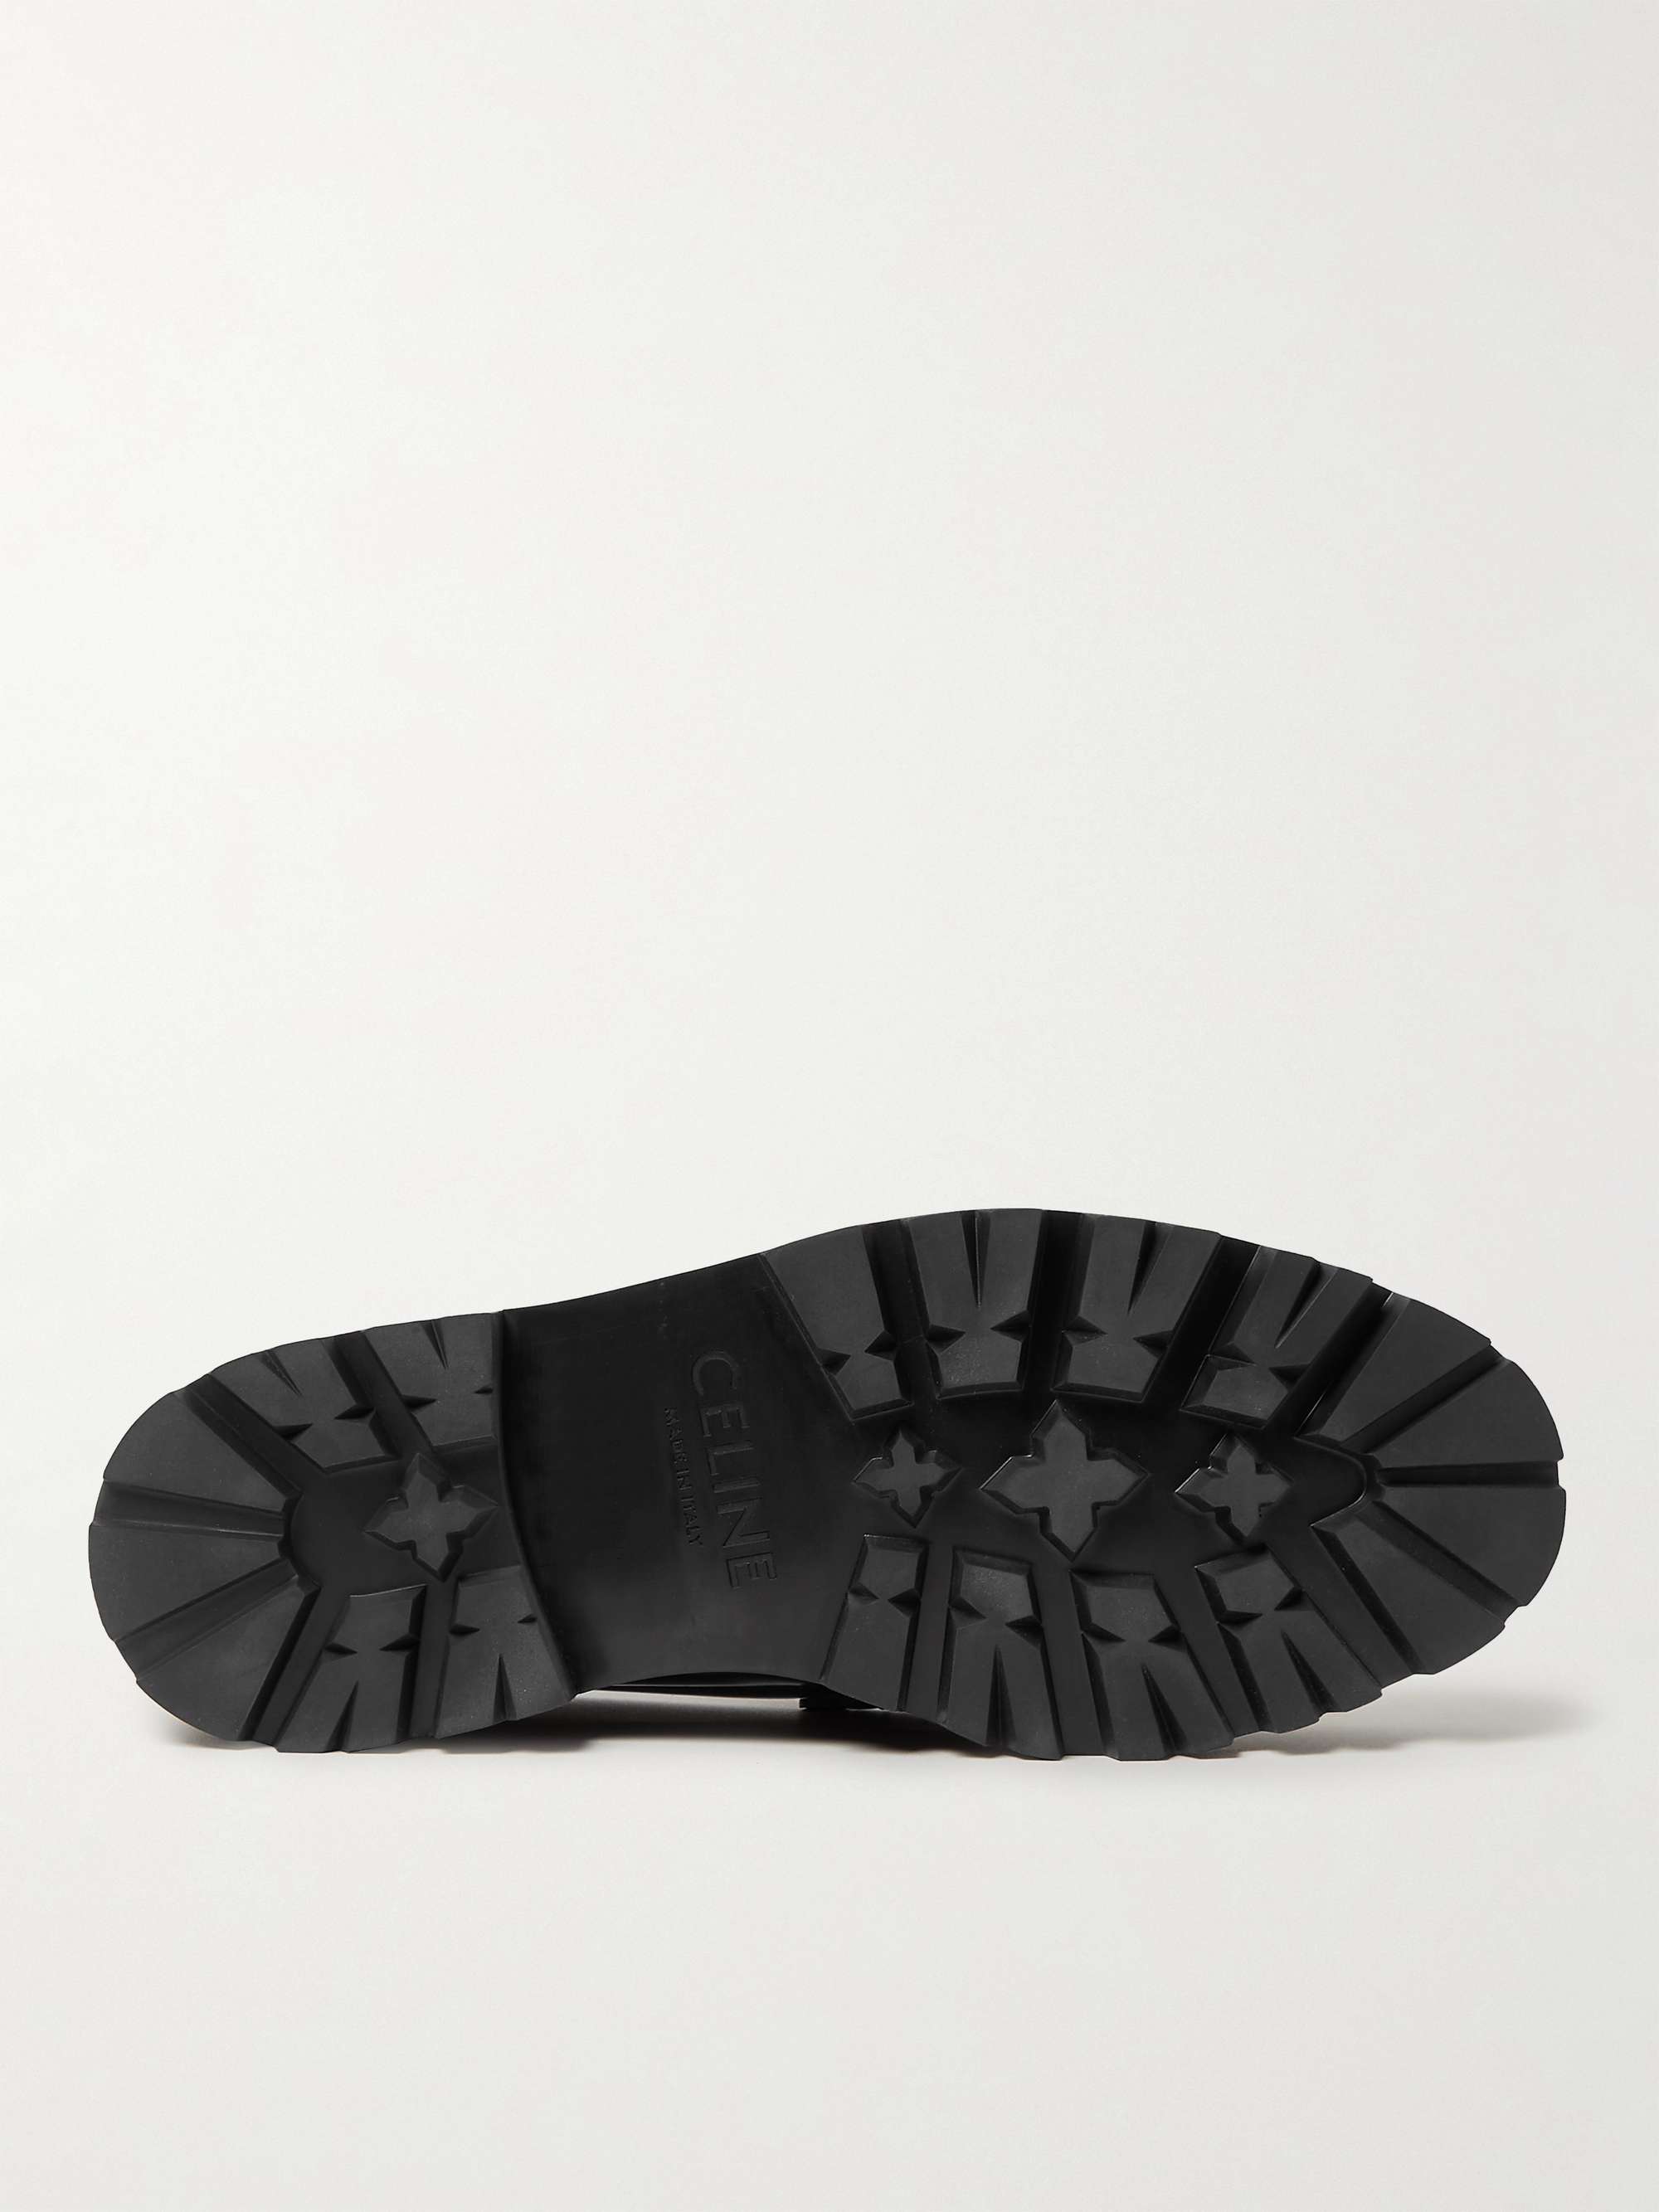 CELINE HOMME Triomphe Zebra-Print Leather Tasselled Loafers